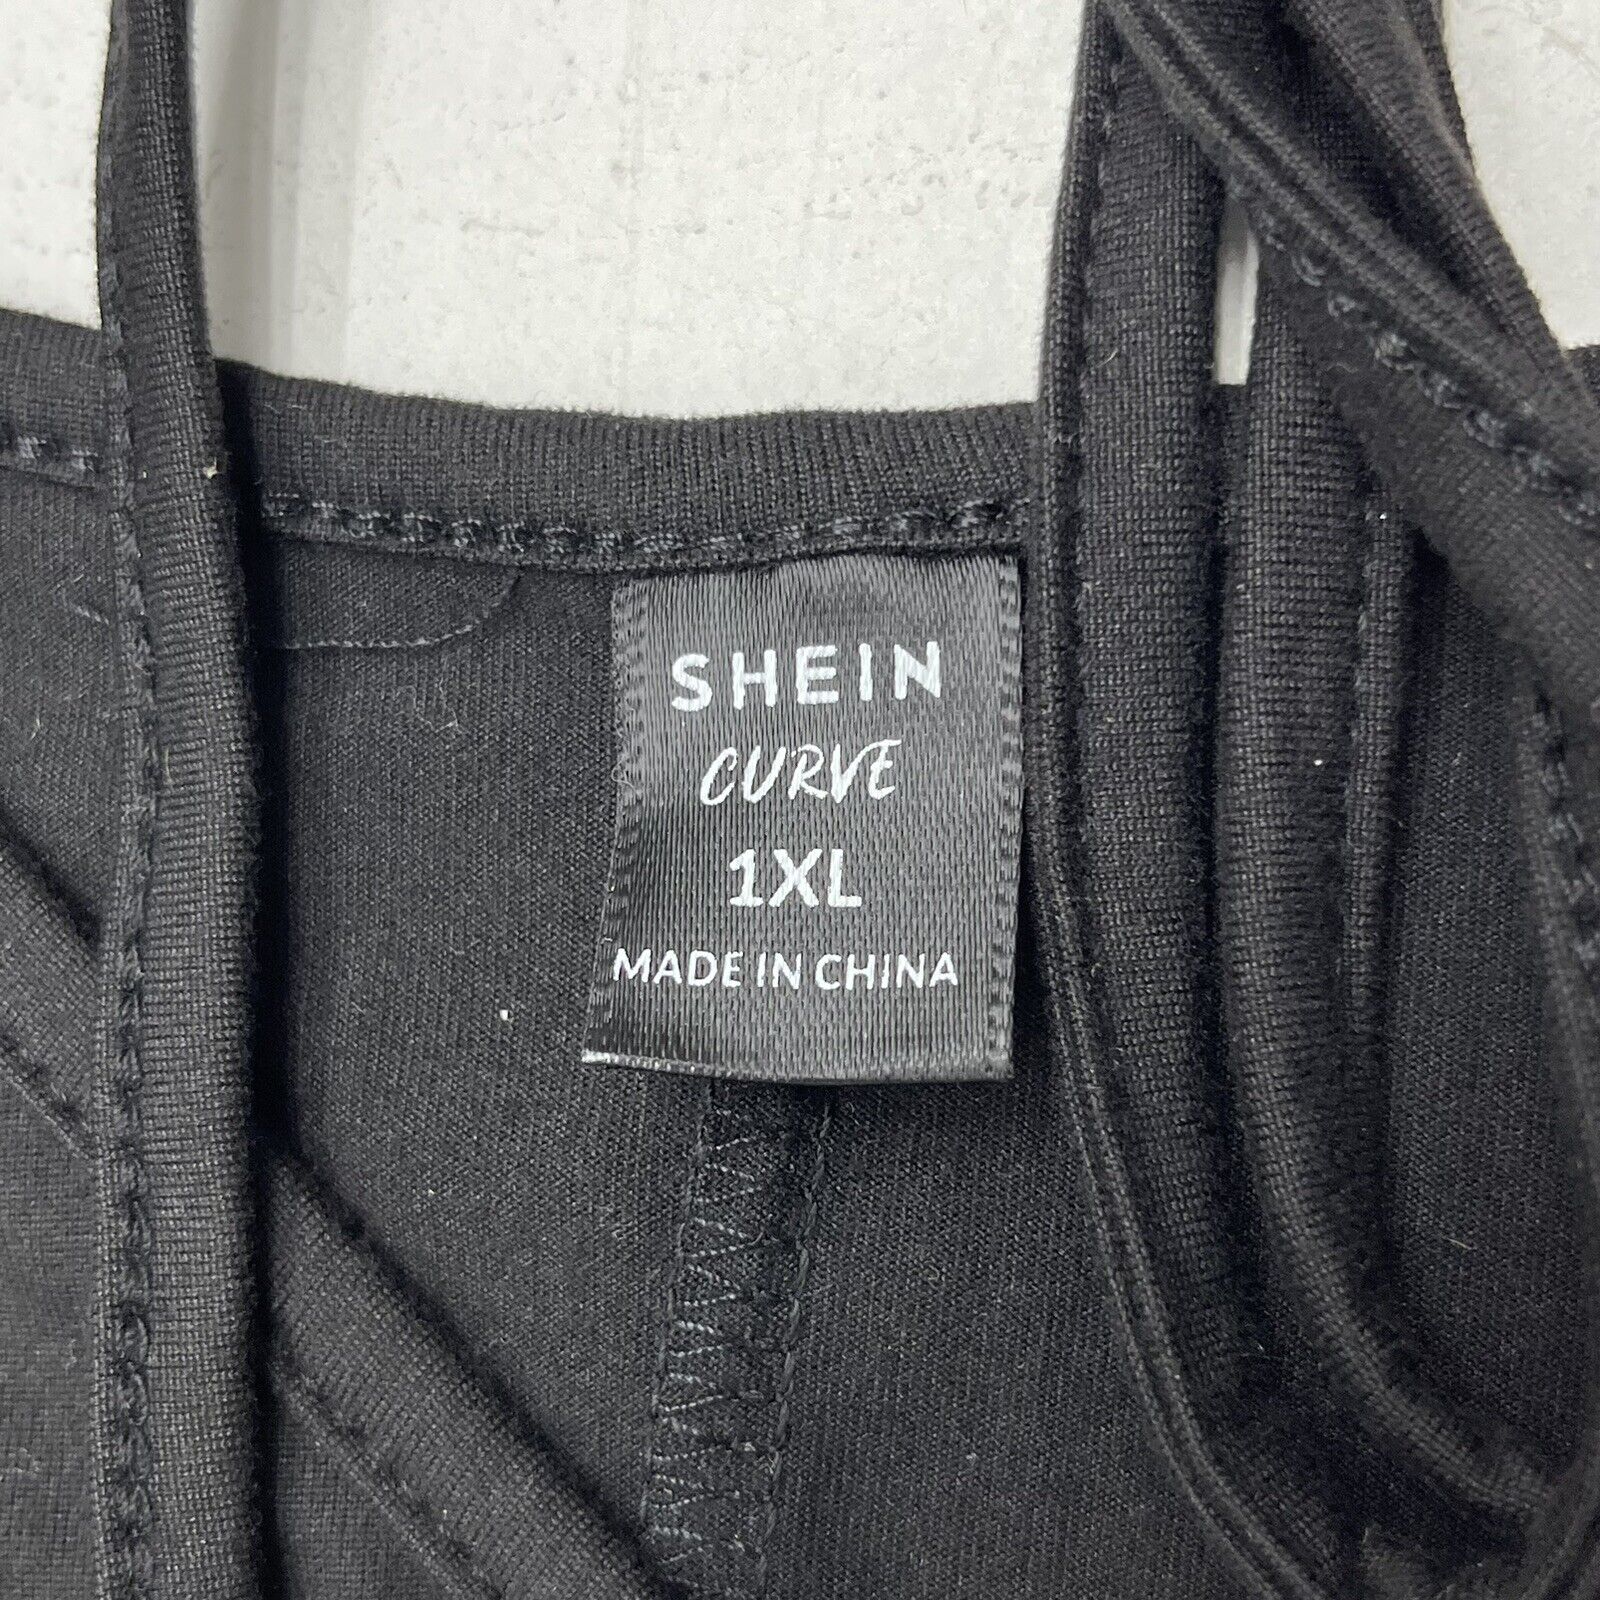 Shein Curve Black Sleeveless Dress Women's Size 1XL NEW - beyond